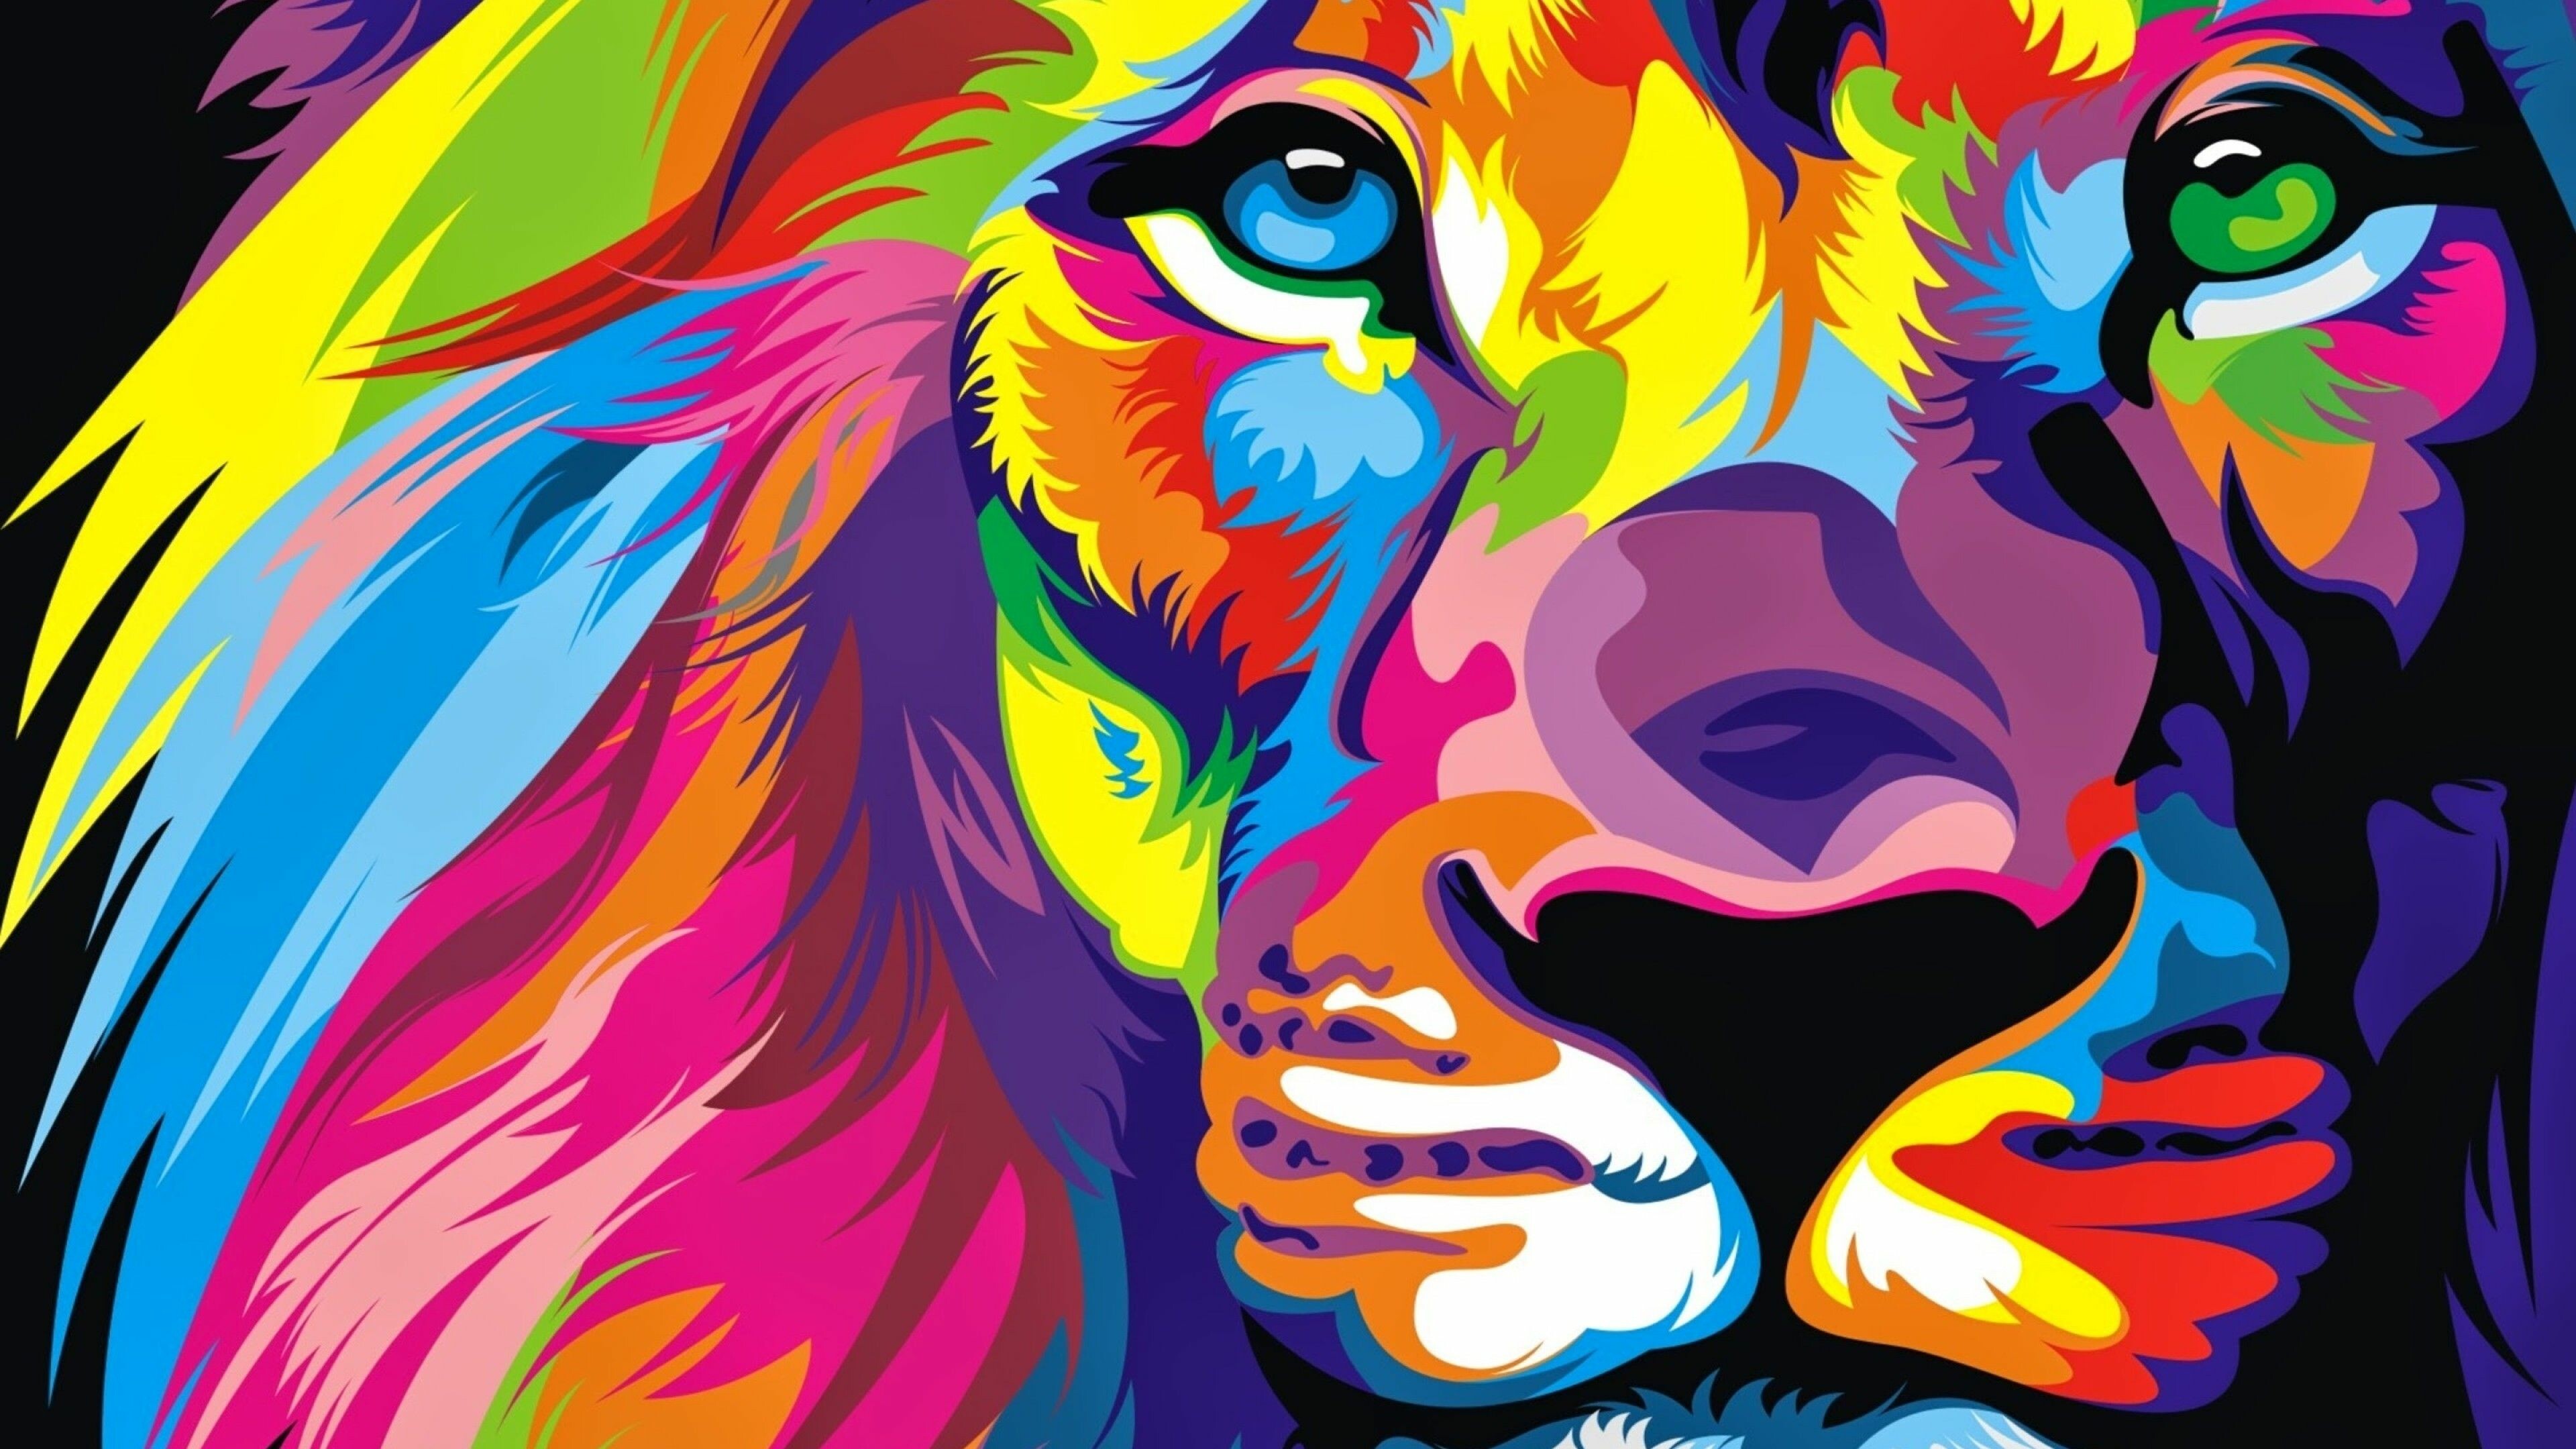 Lion: An apex and keystone predator, Art, Painting, Colorful. 3840x2160 4K Wallpaper.